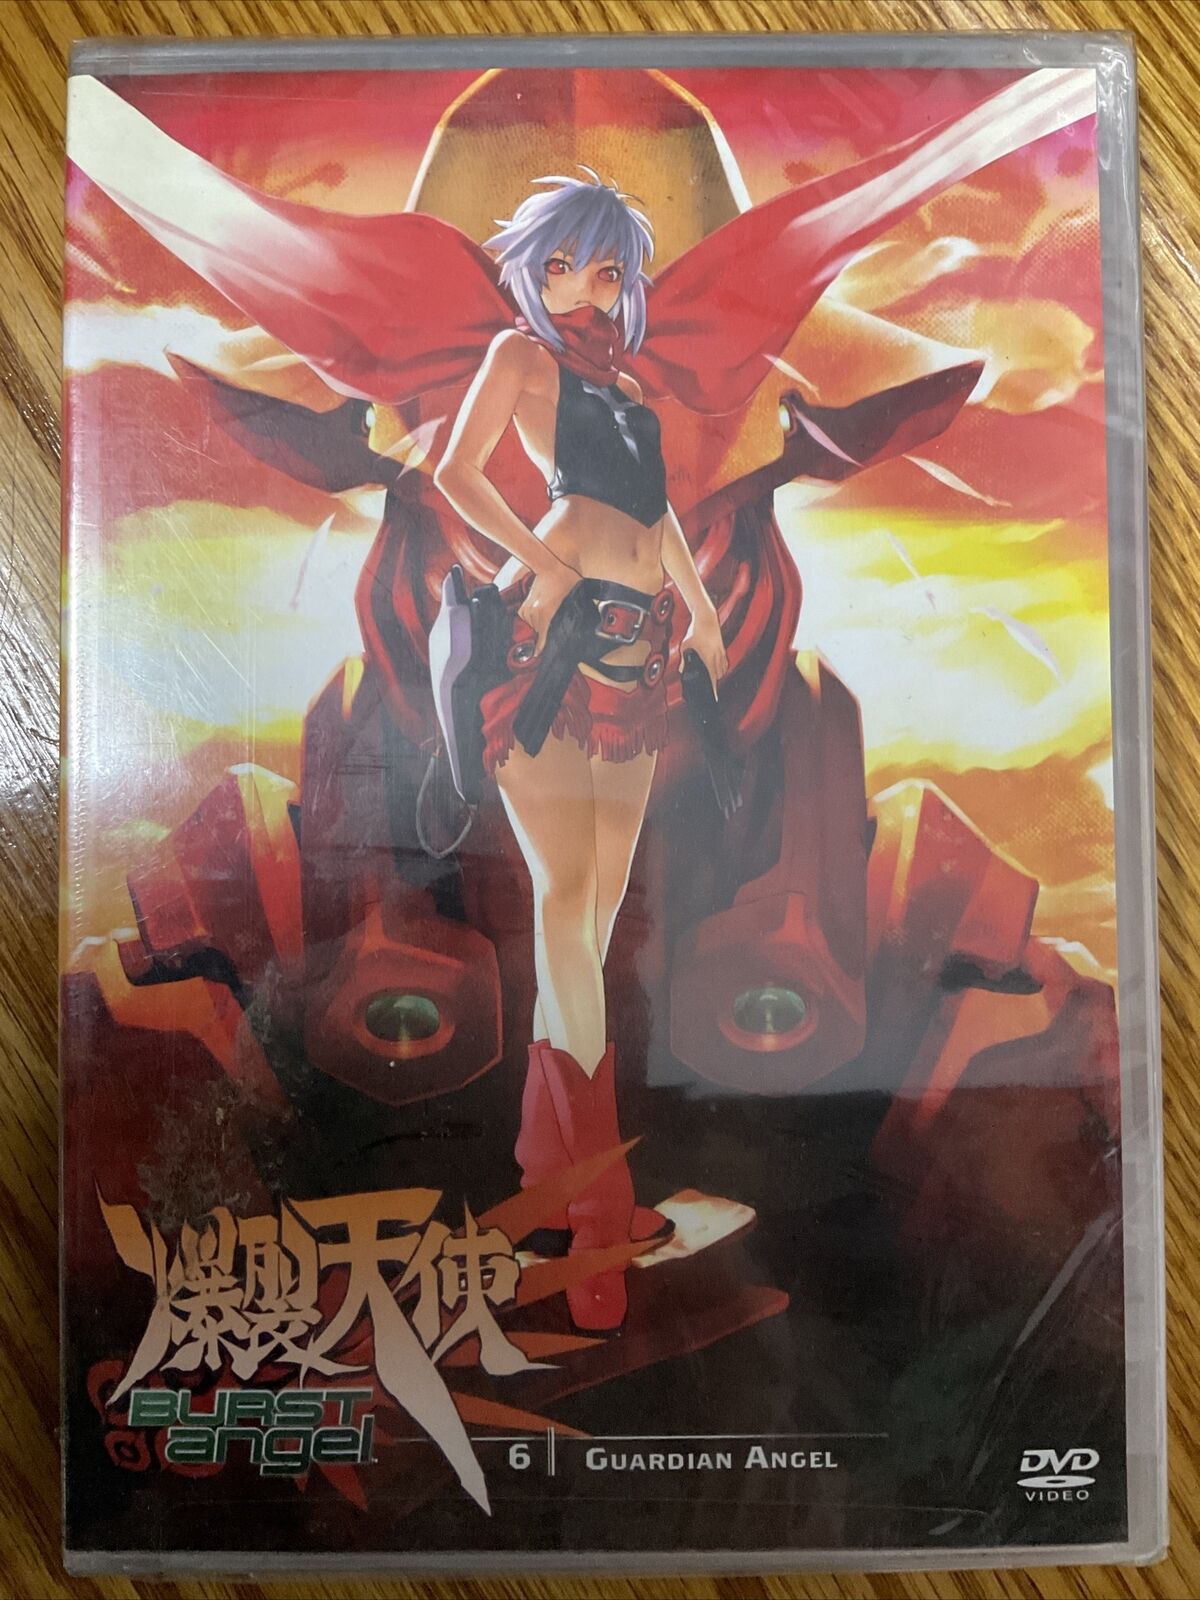 Burst Angel 6 Guardian Angel - anime DVD movie - SEALED 704400077340 | eBay